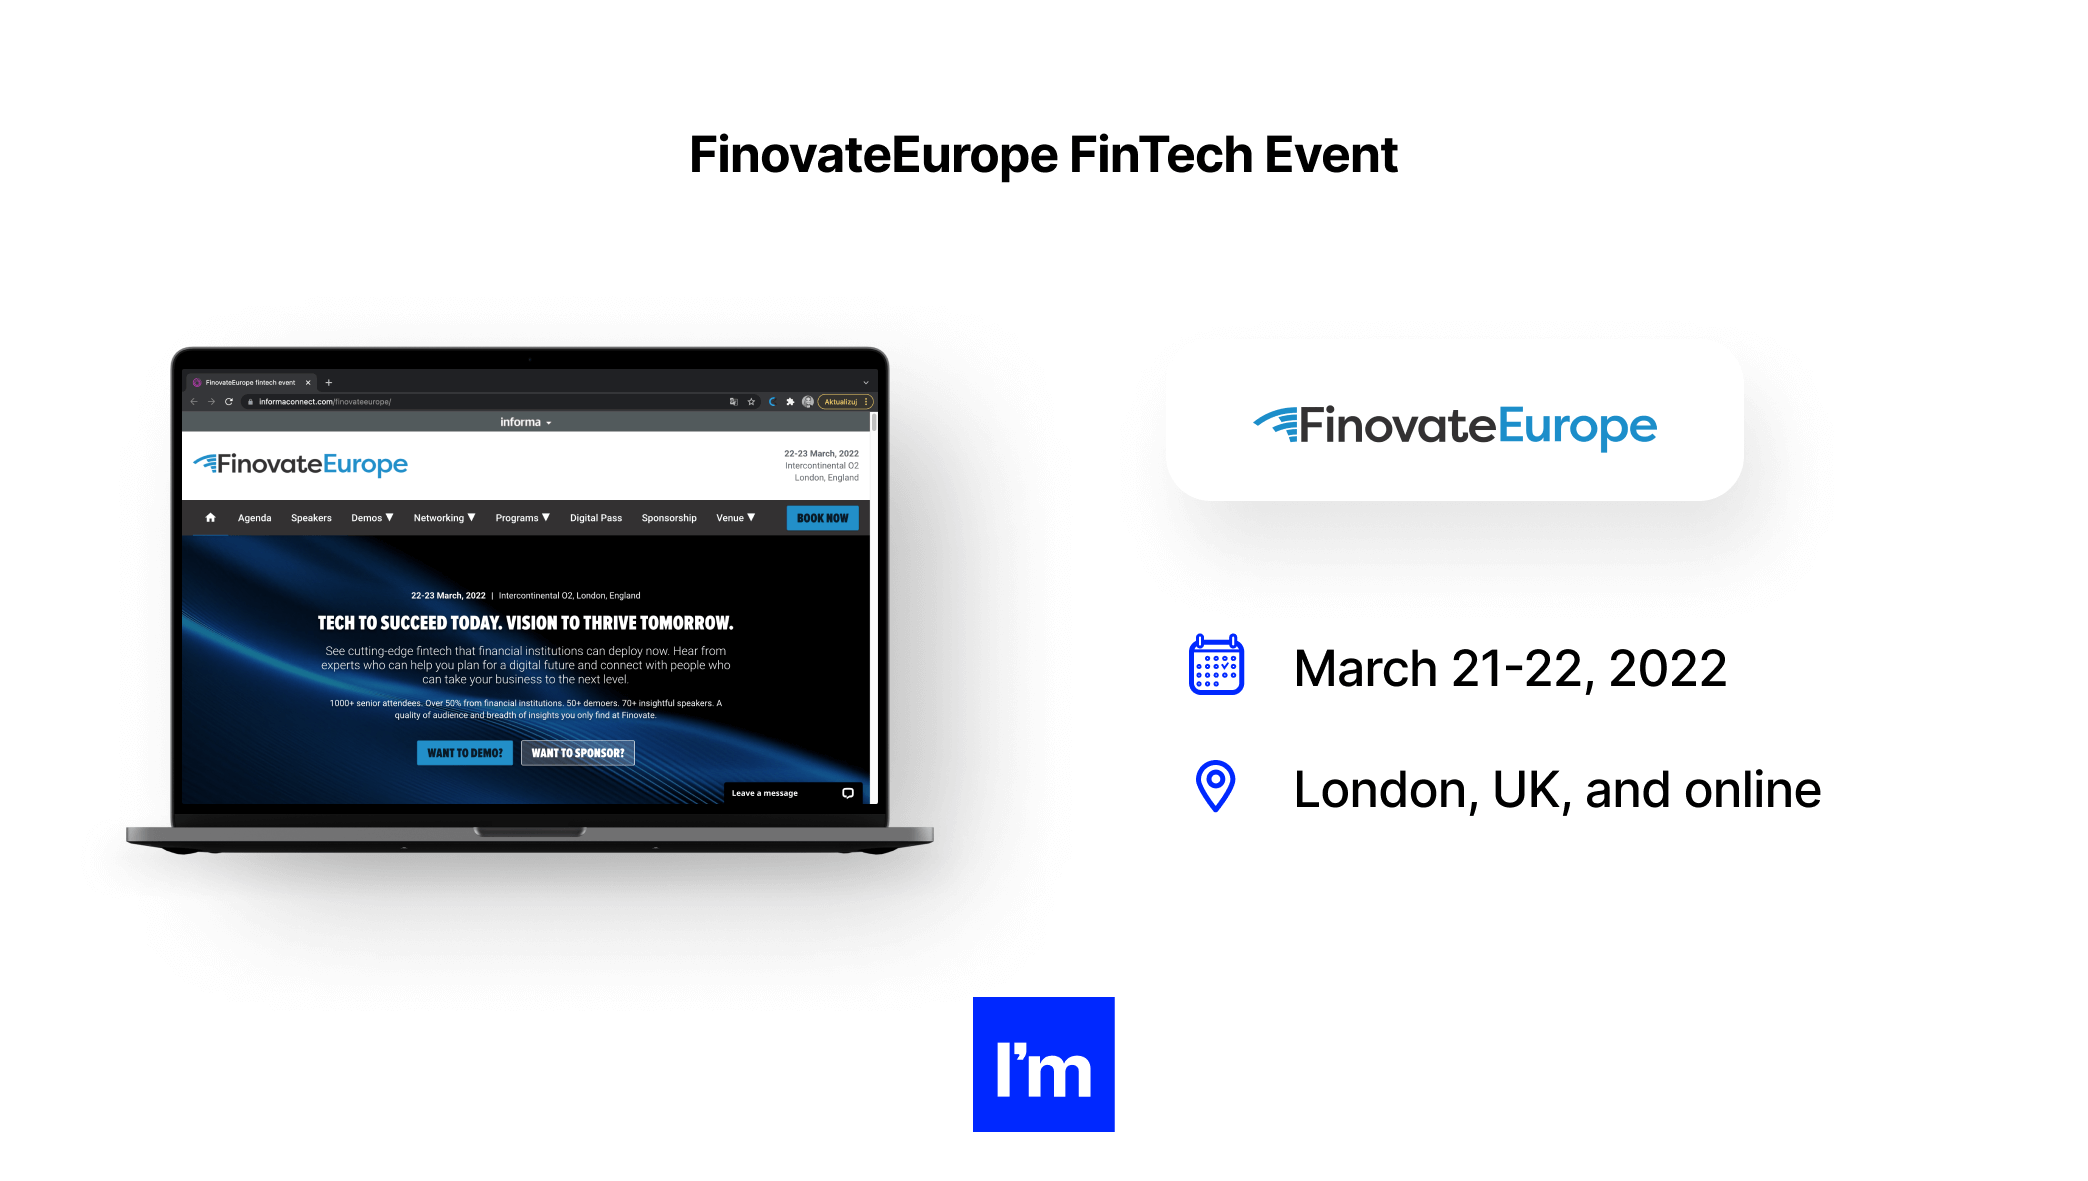 FinTech Conferences - FinovateEuropefintech